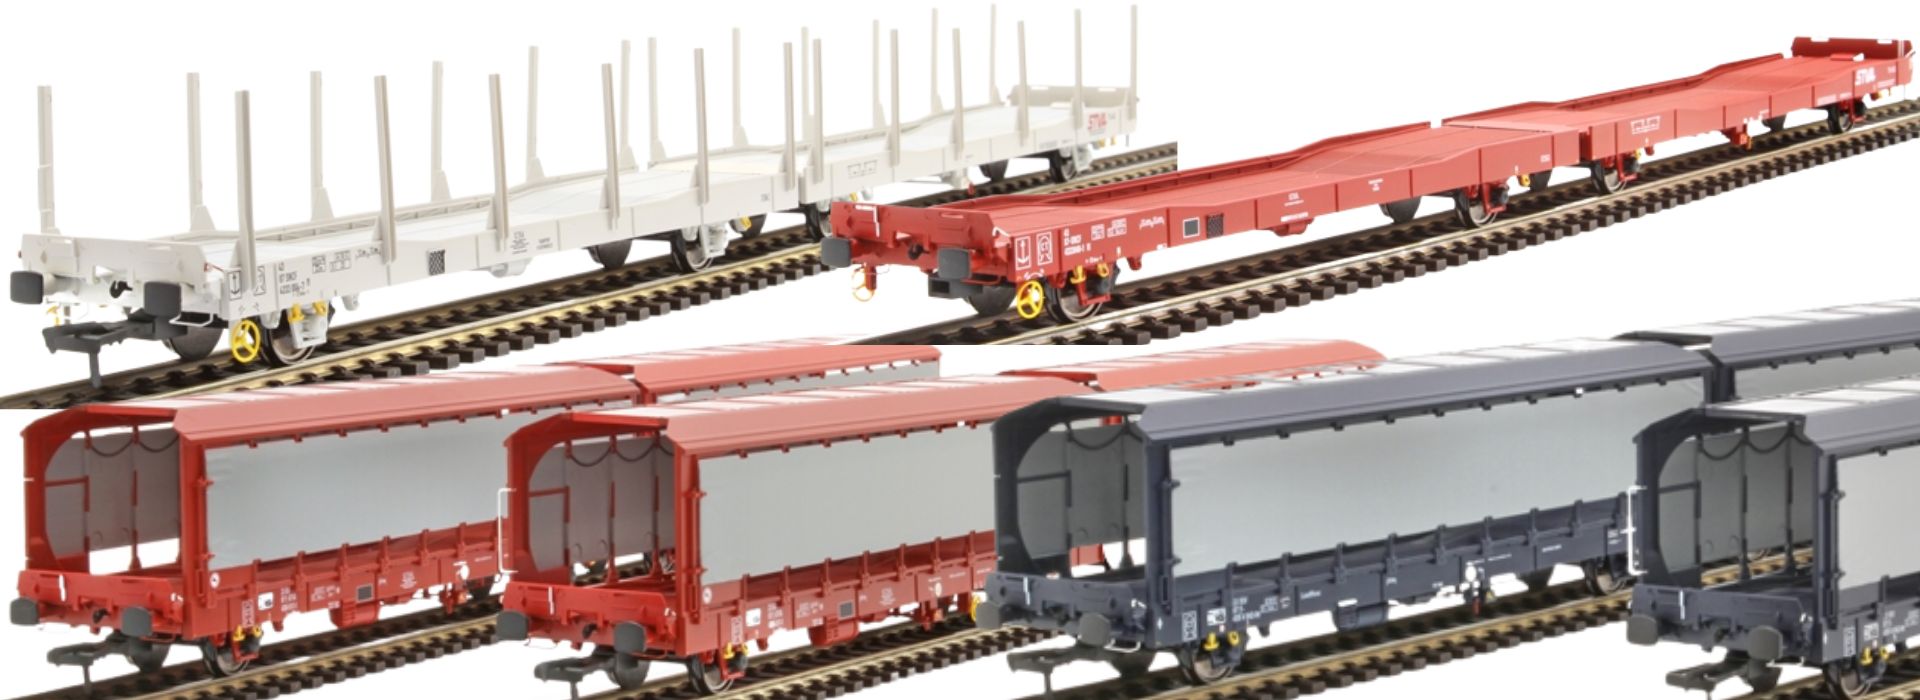 Revolution Trains OO Gauge (1:76 Scale) IPA Single-Deck Car Carrier